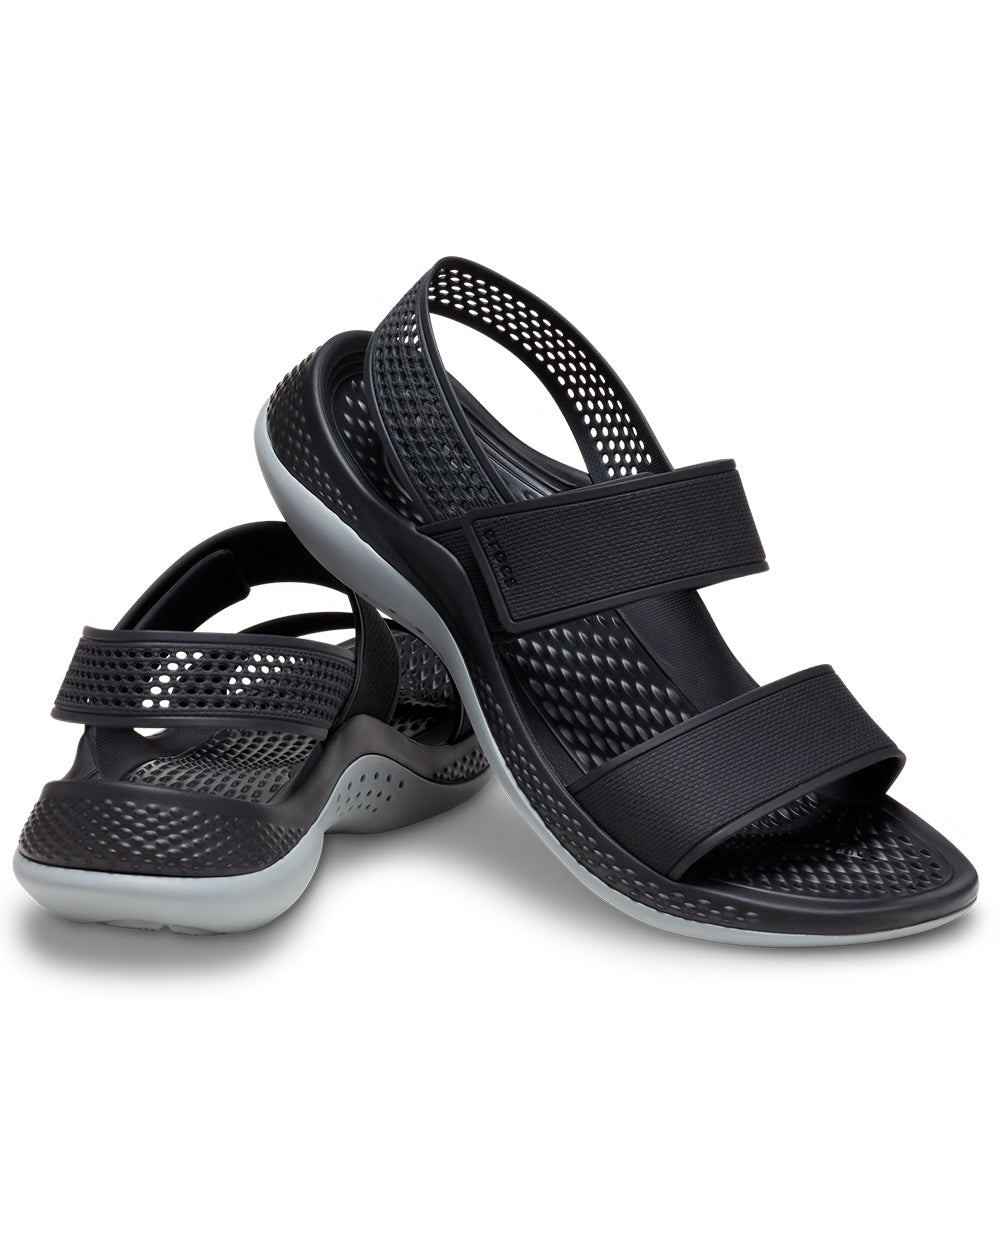 Crocs Women's LiteRide 360 Sandal Black/Light Grey